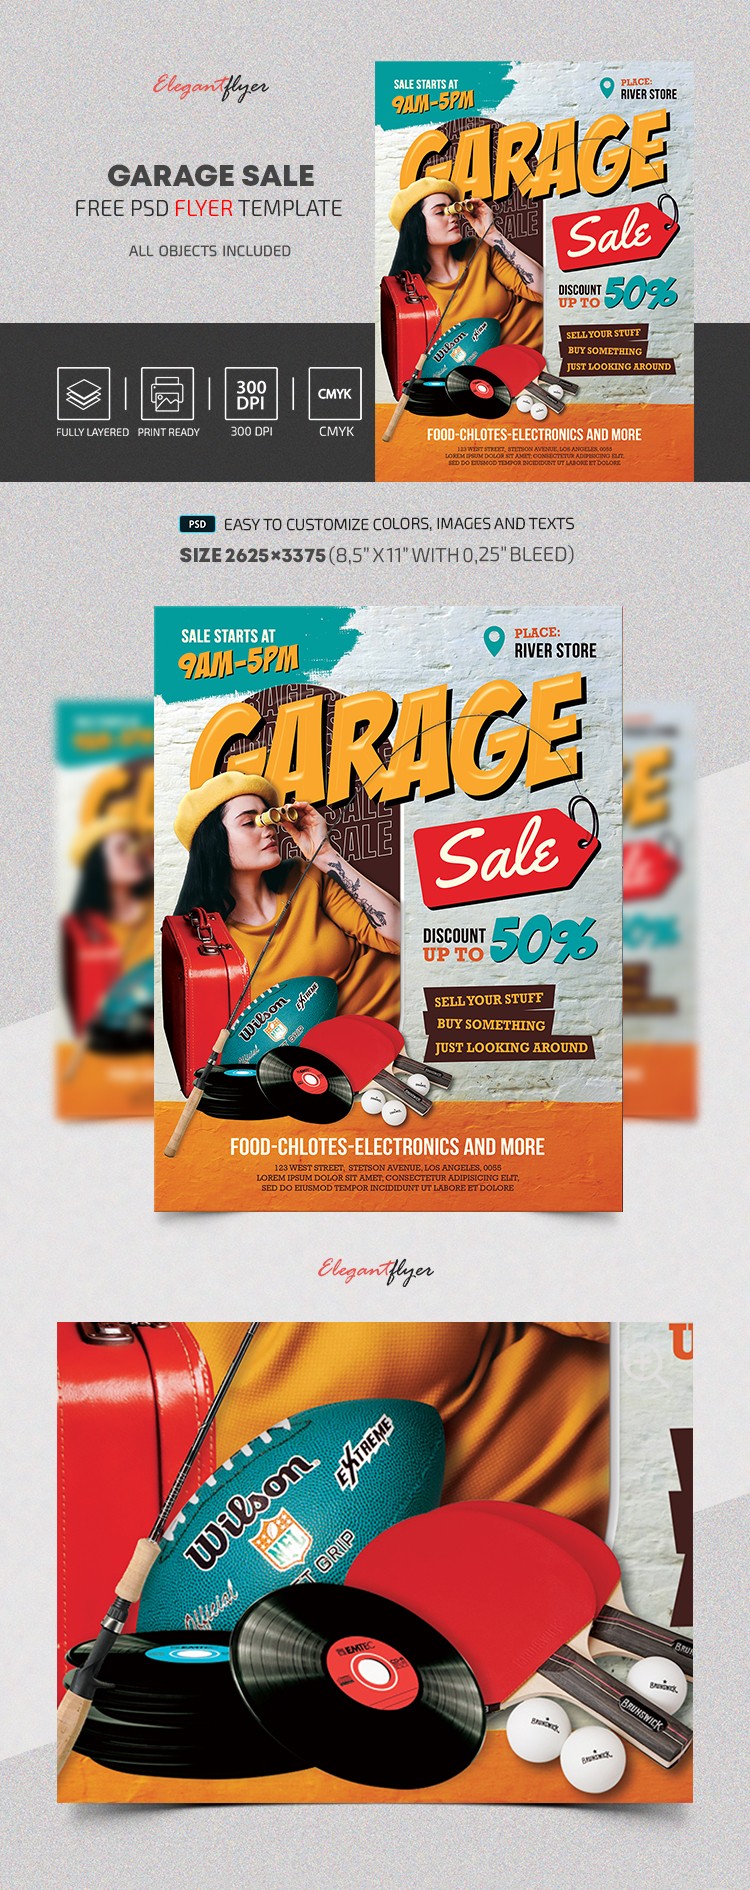 Garage Sale Flyer by ElegantFlyer